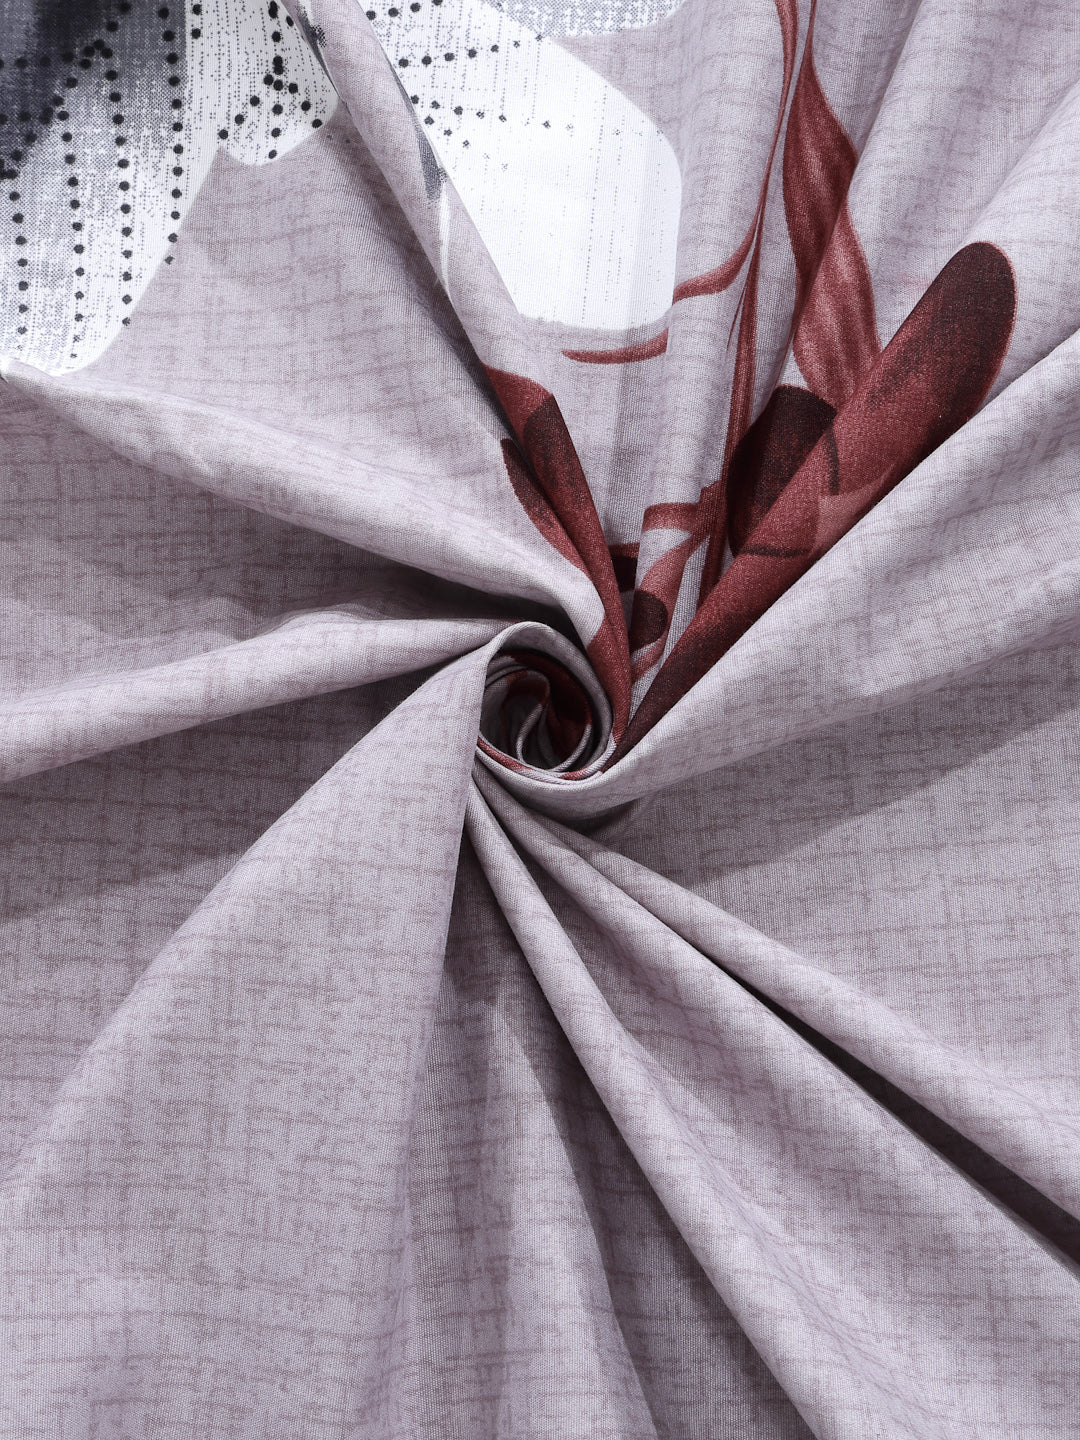 Arrabi Brown Floral TC Cotton Blend Single Size Bedsheet with 1 Pillow Cover ( 220 X 150 cm)